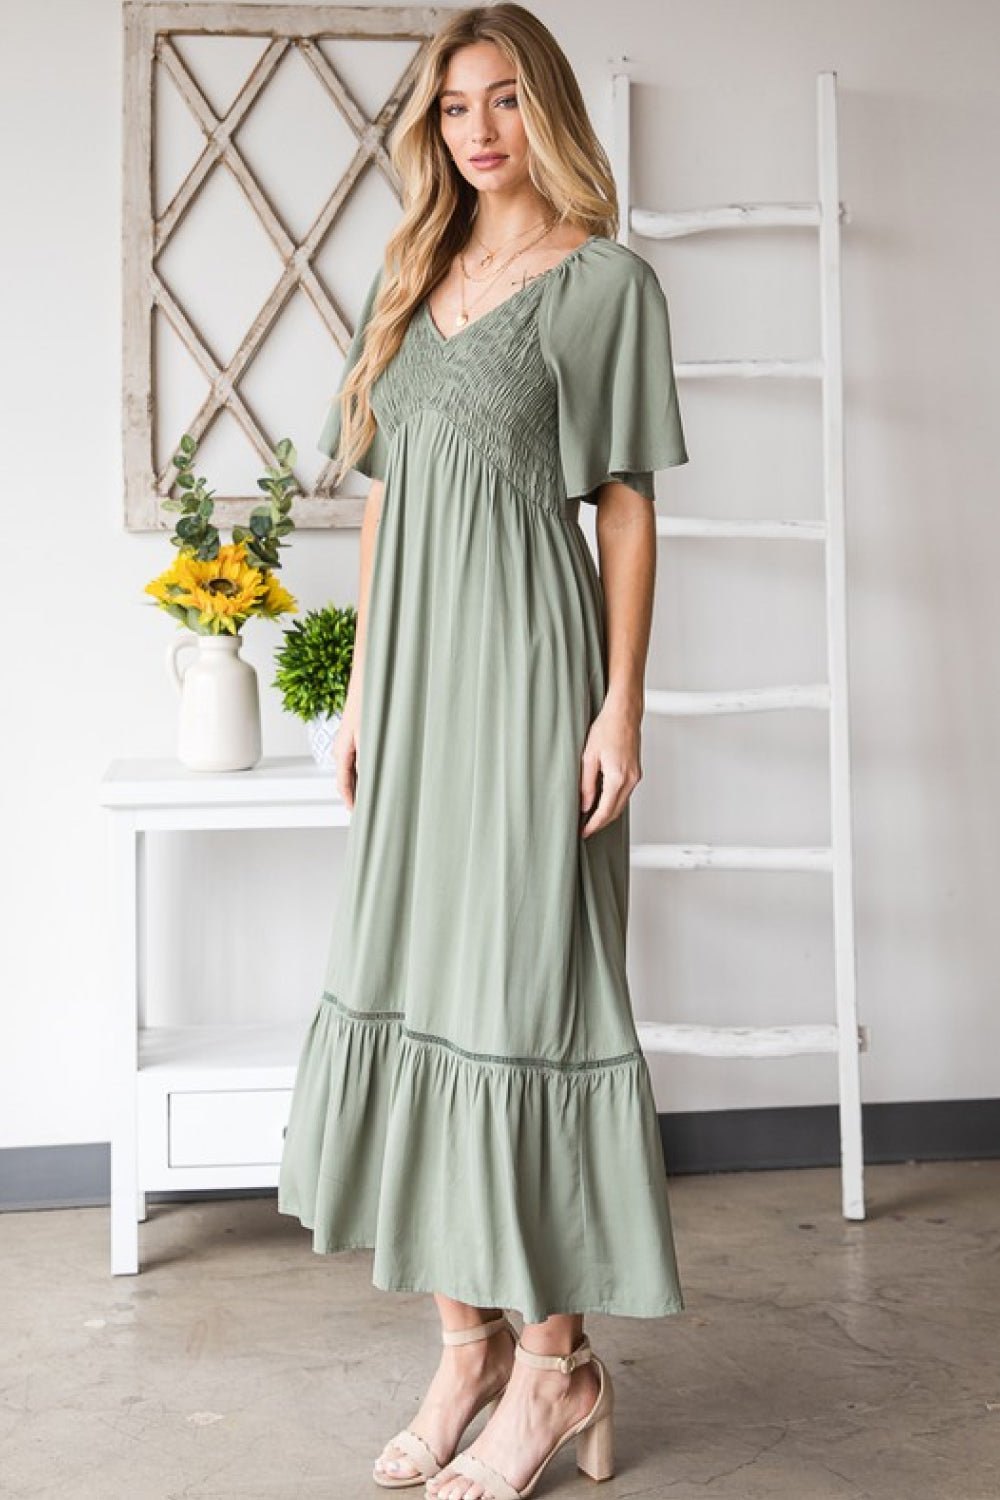 HEYSON Full Size Smocked Pocket Midi Dress in Sage - Fashion Girl Online Store